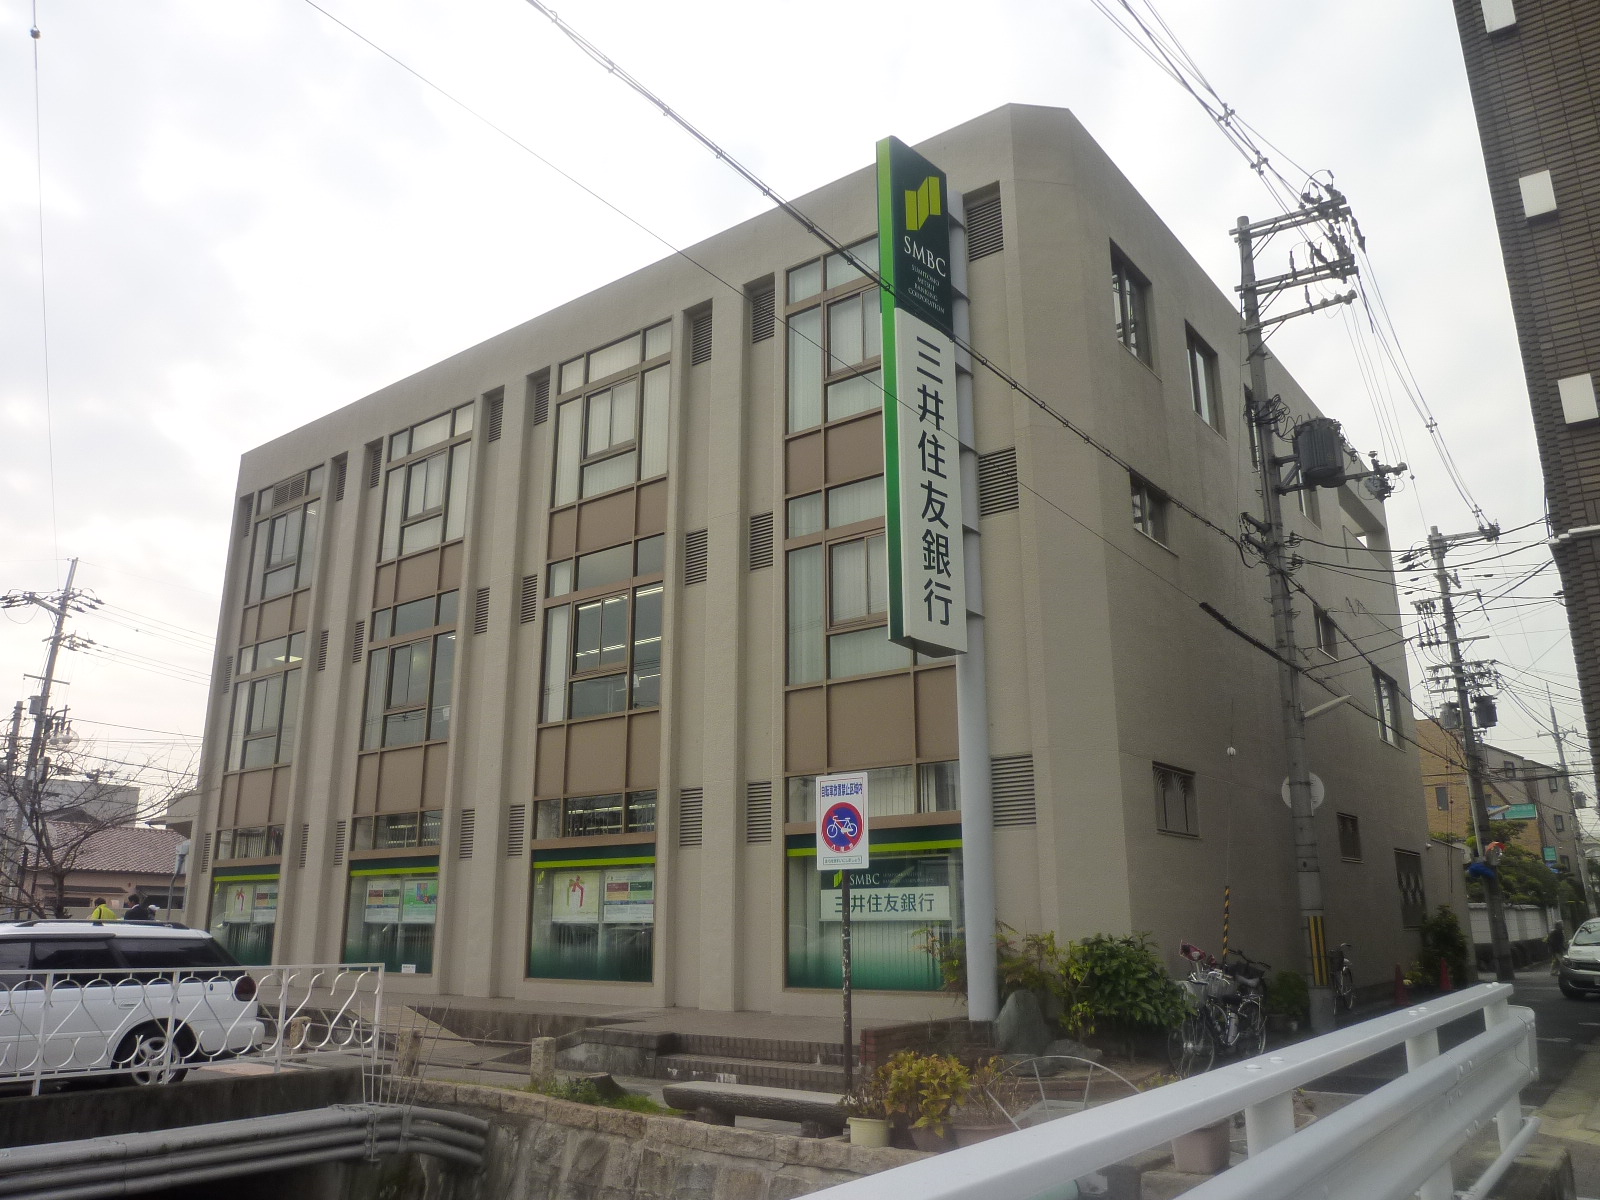 Bank. 270m to Sumitomo Mitsui Banking Corporation Yamamoto Branch (Bank)